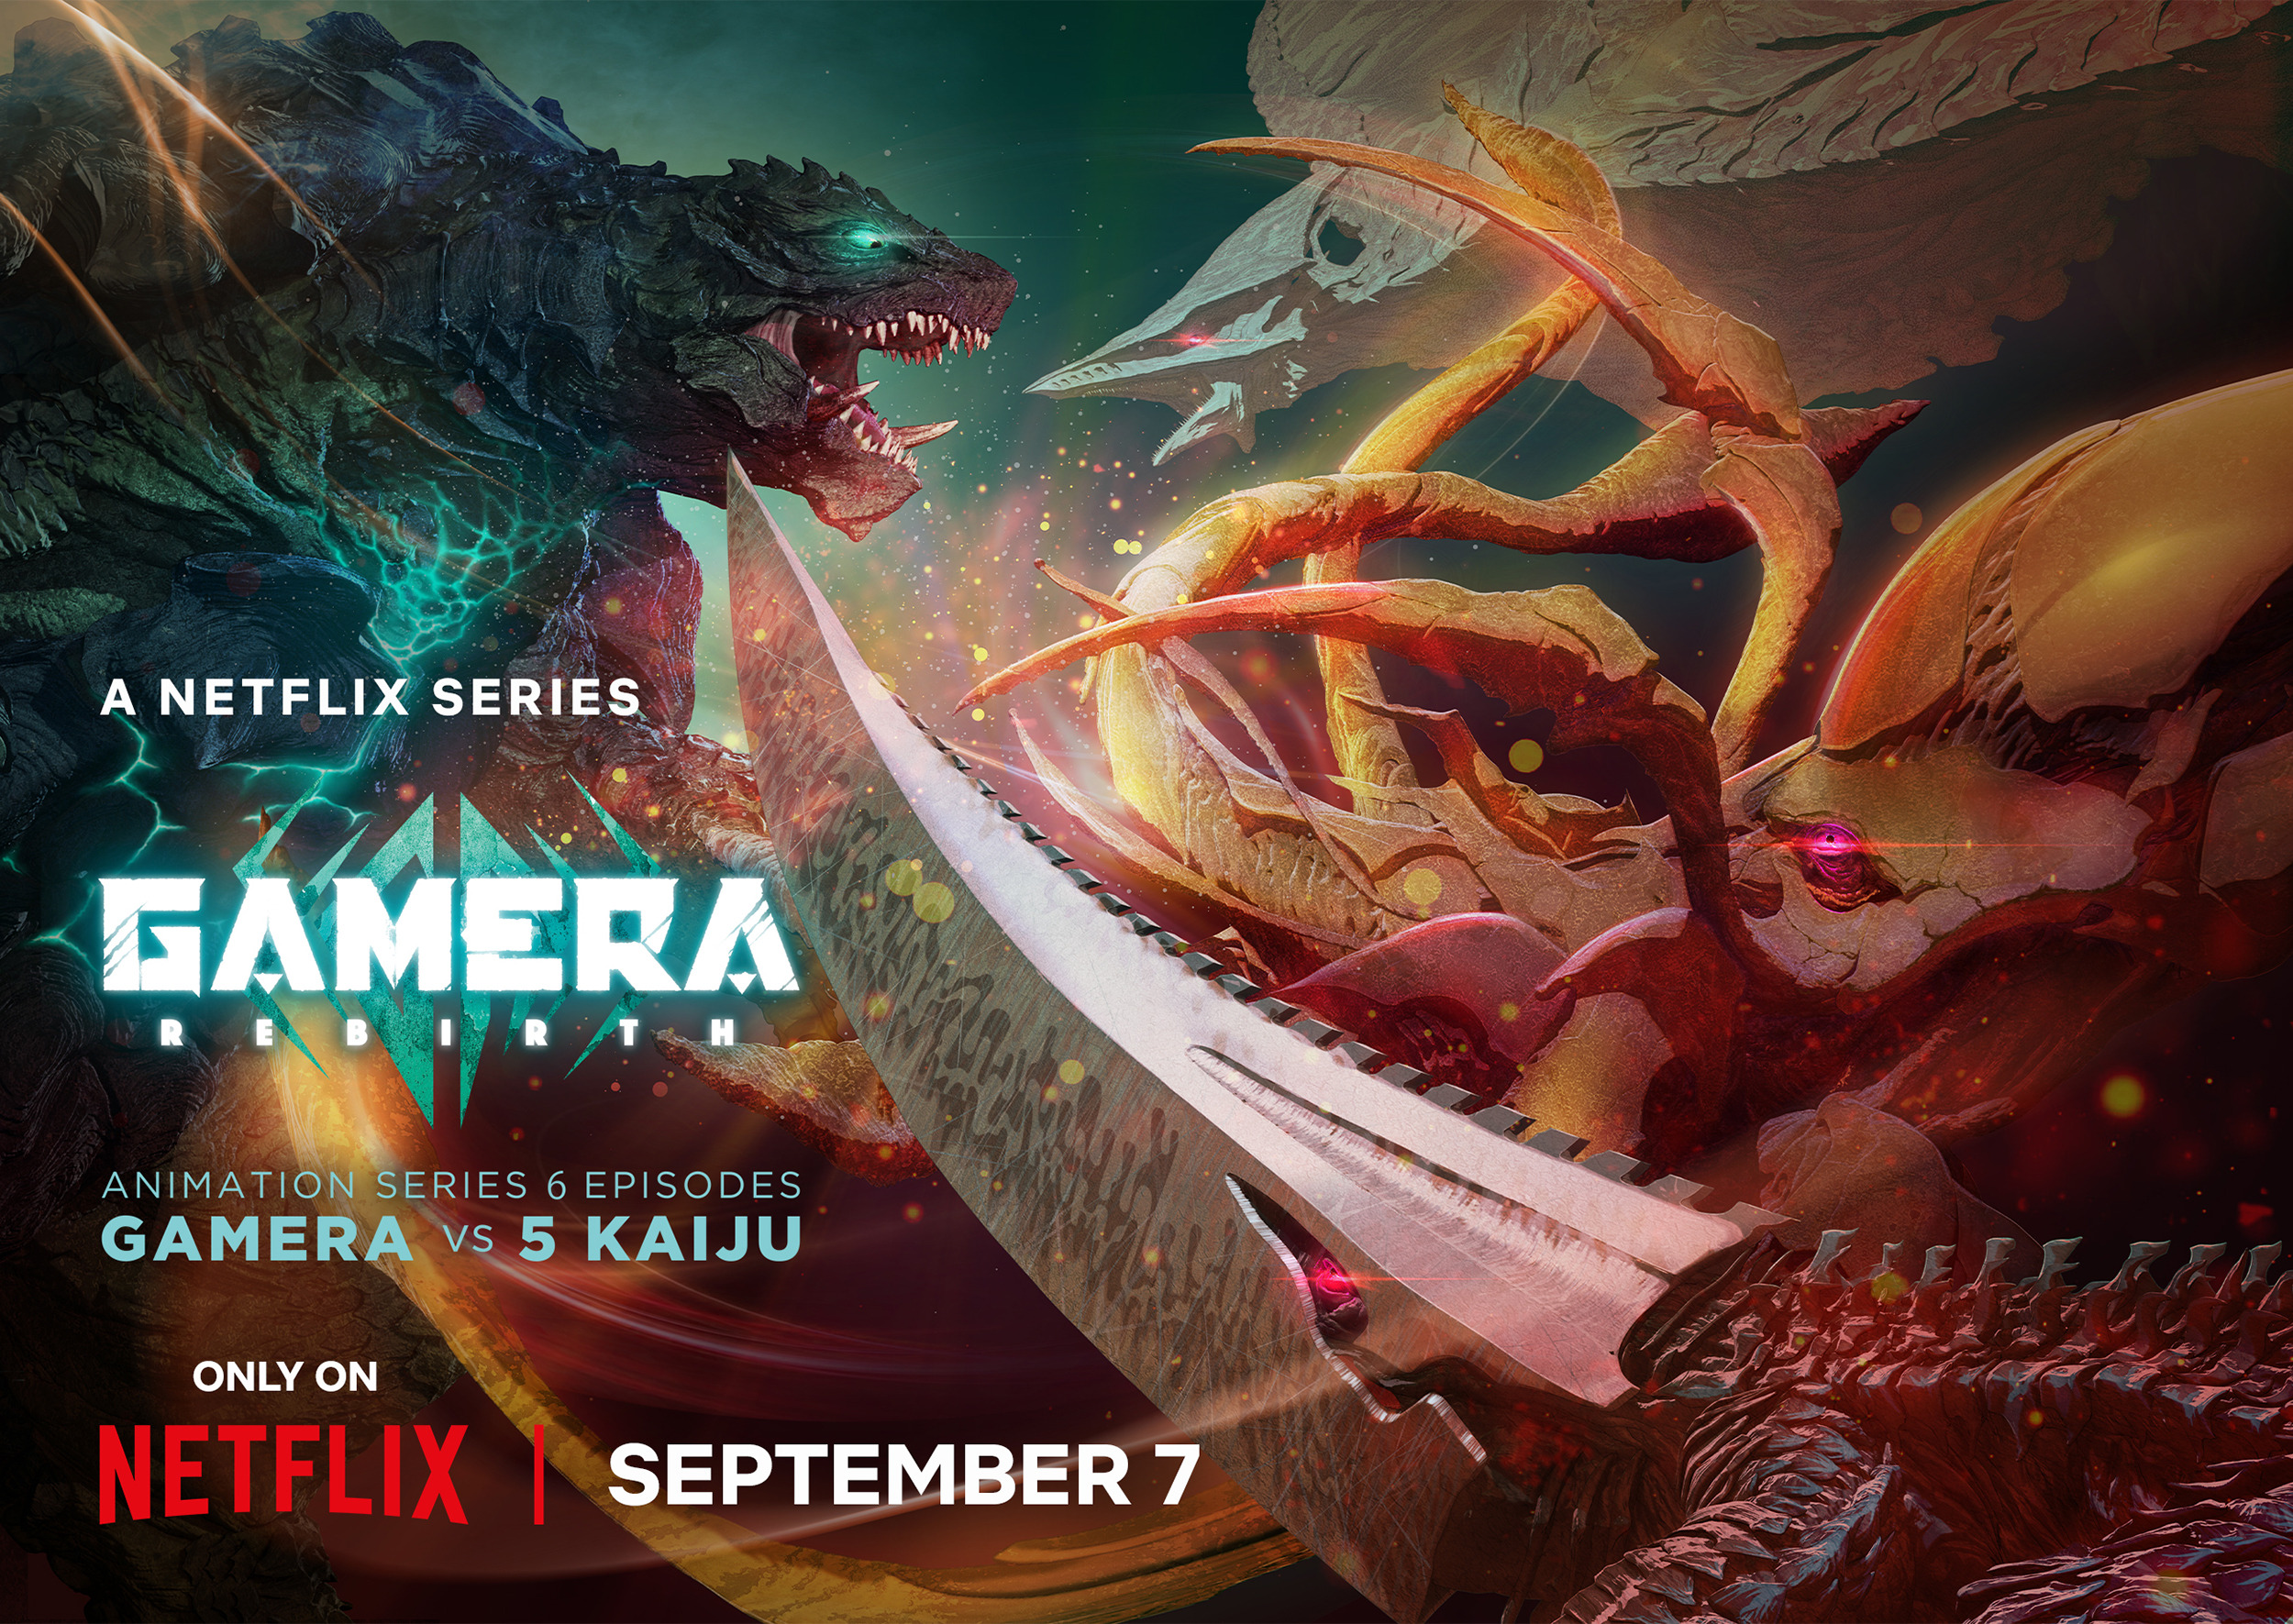 Mega Sized TV Poster Image for Gamera: Rebirth 